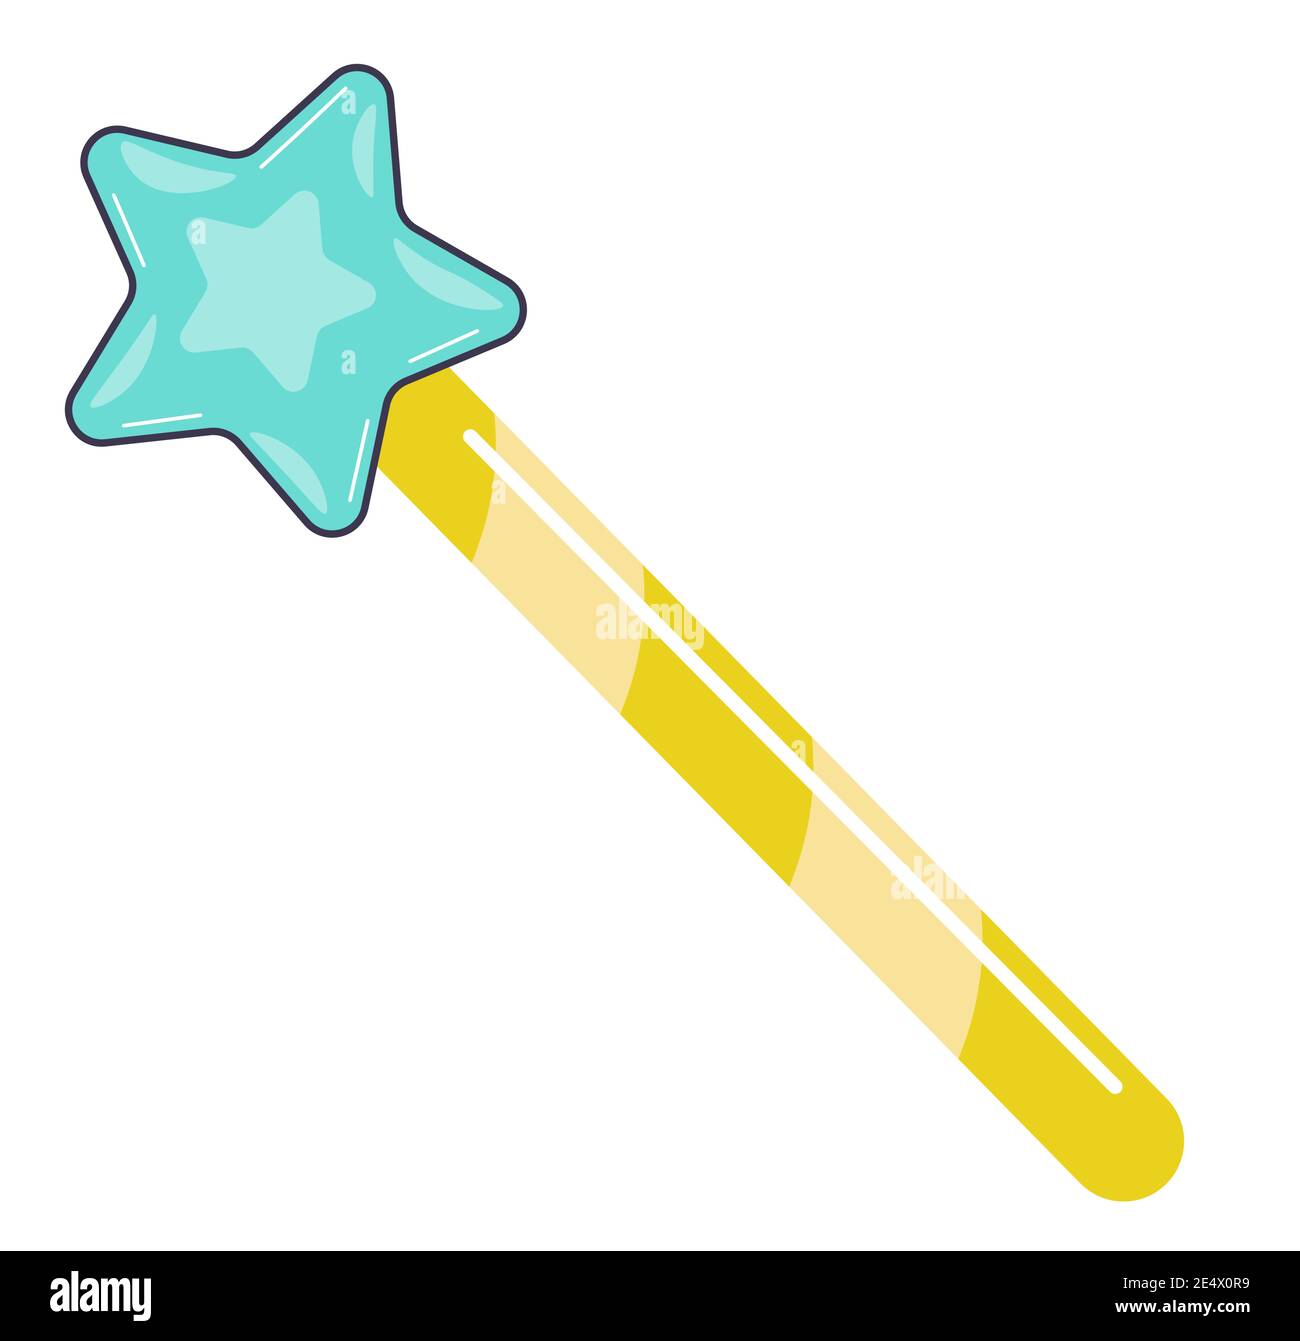 Magic wand with star, cartoon wizards stick vector Stock Vector Image & Art  - Alamy